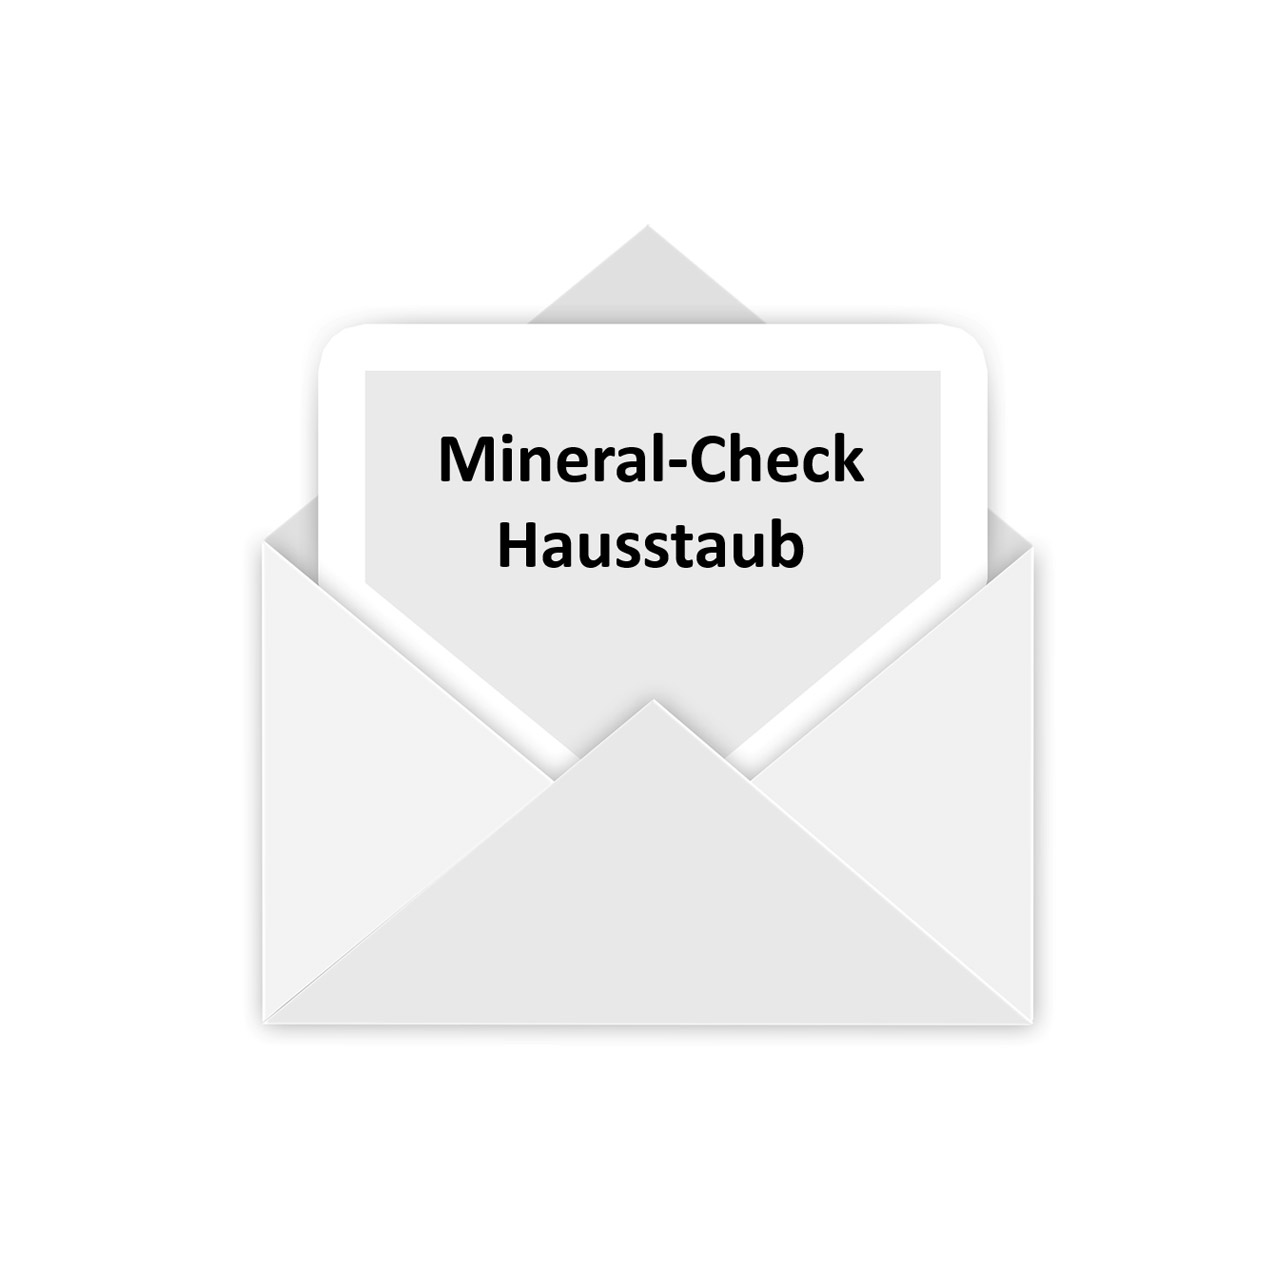 Mineral-Check Hausstaub